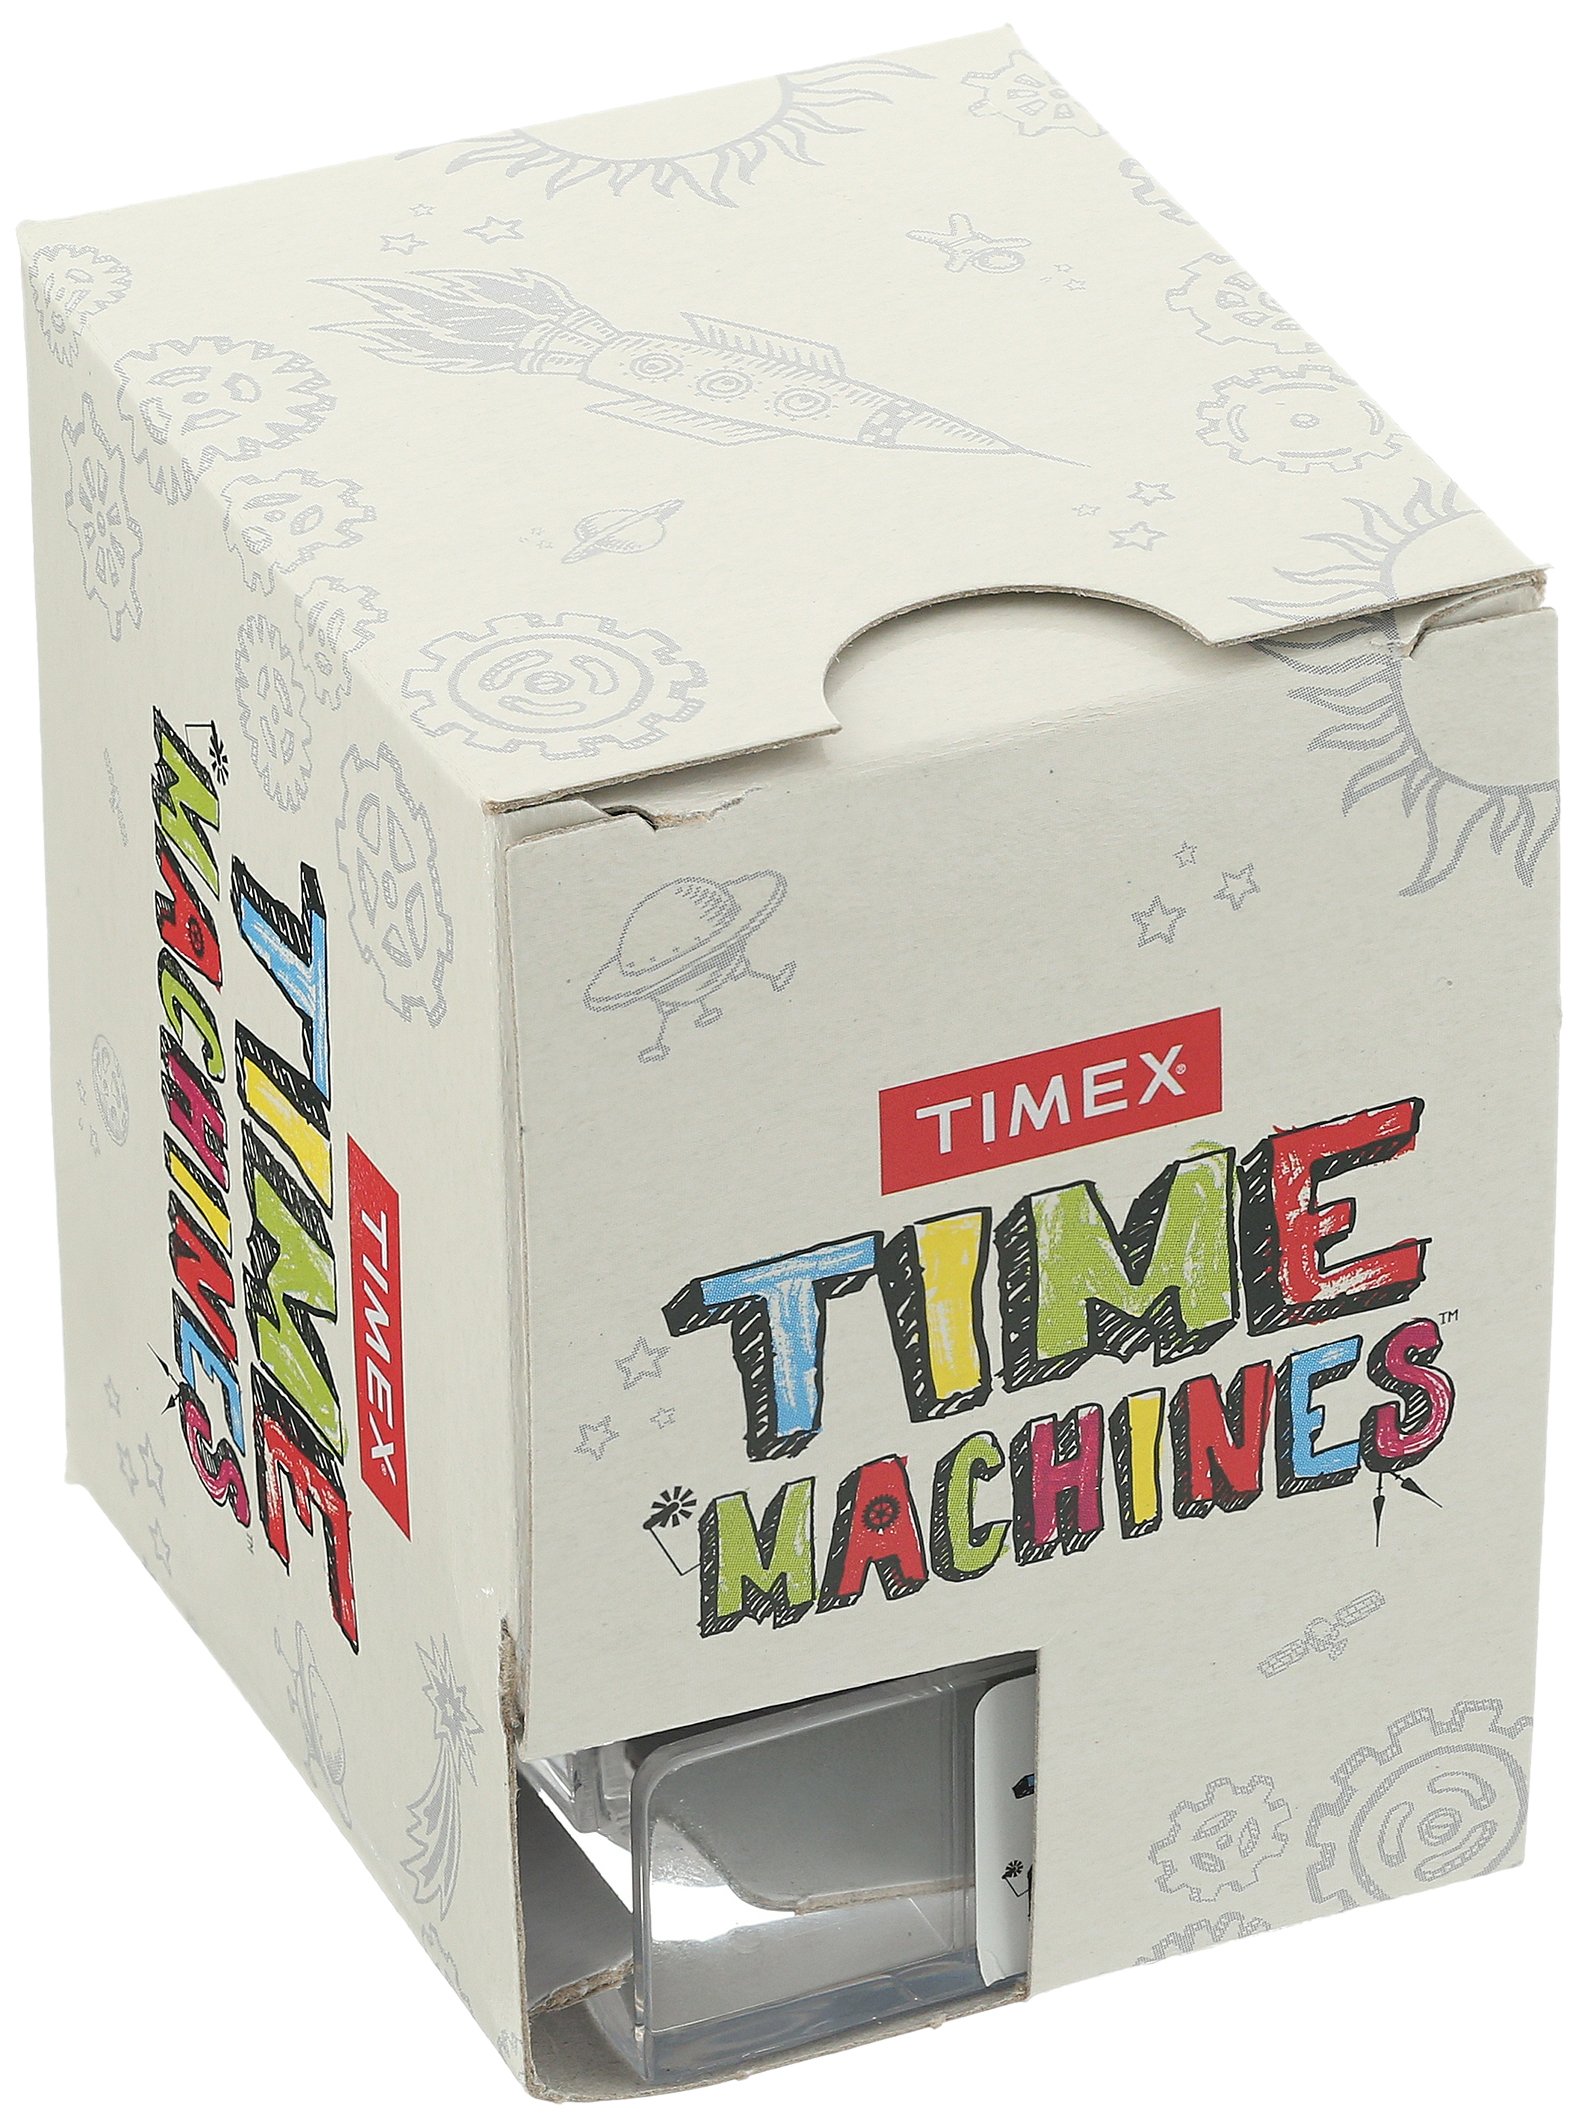 Timex Girls Time Machines Analog Elastic Fabric Strap Watch